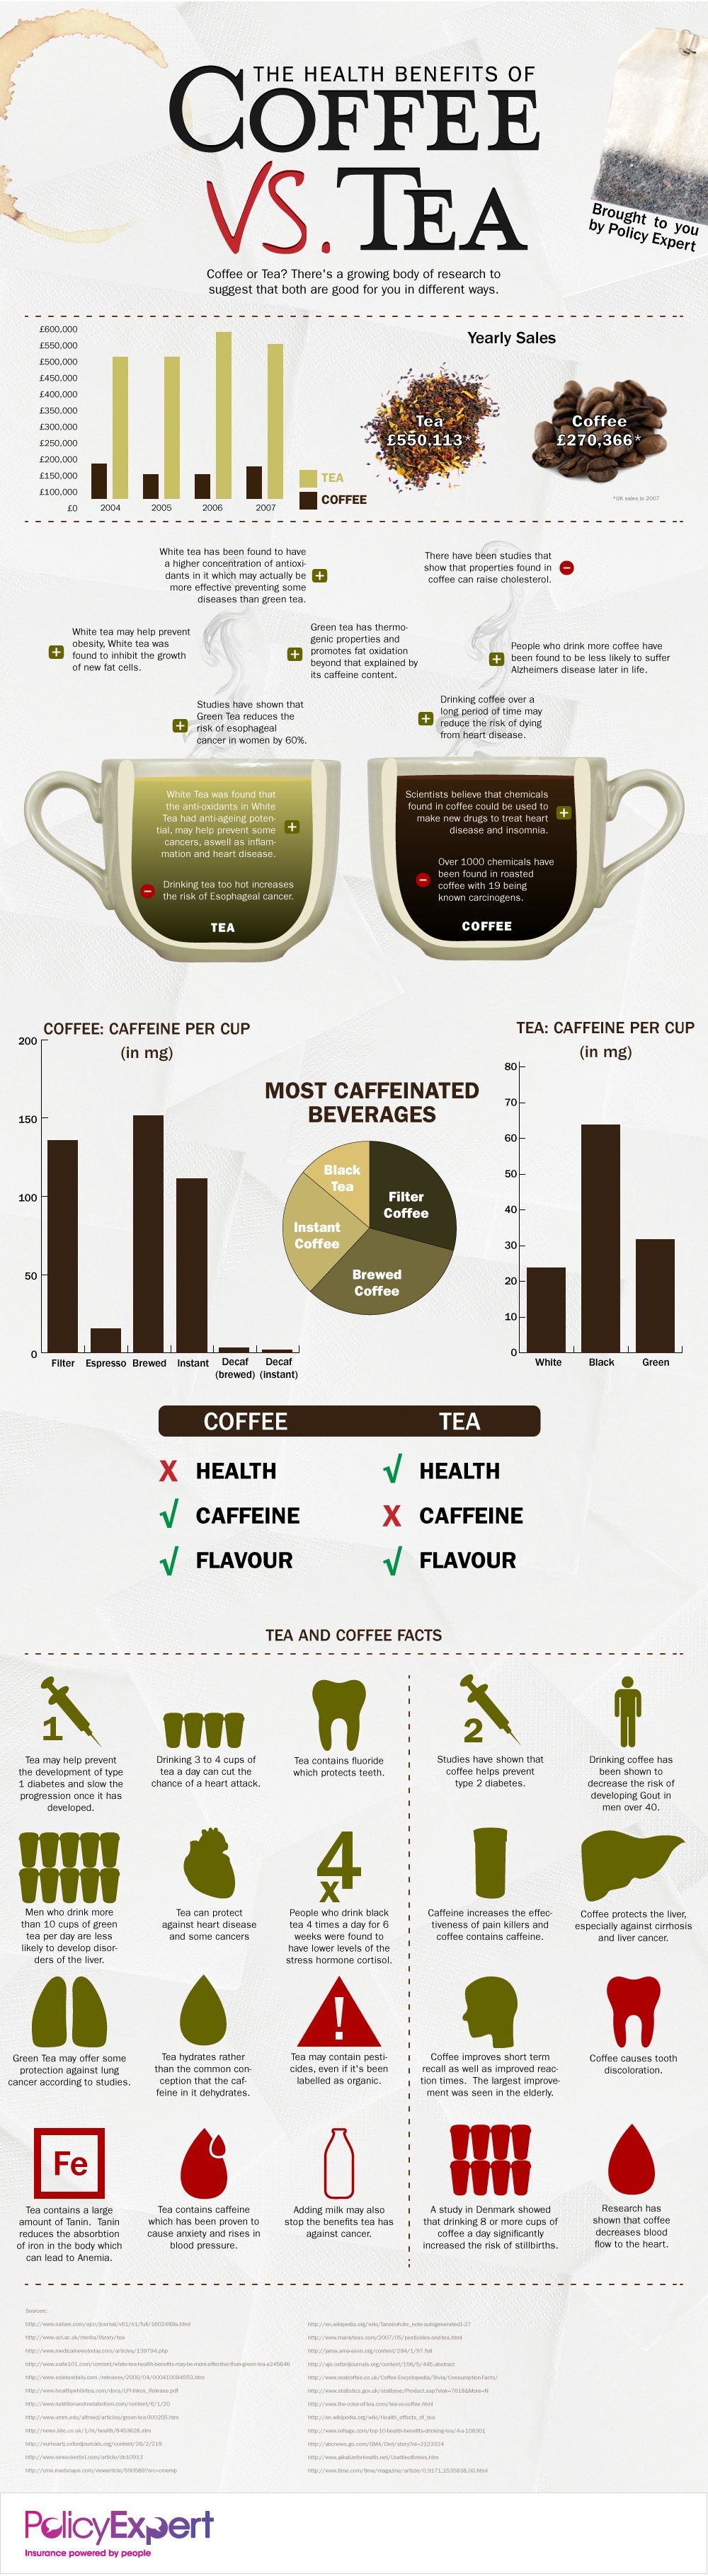 Coffee vs. Tea: The Health Benefits Compared